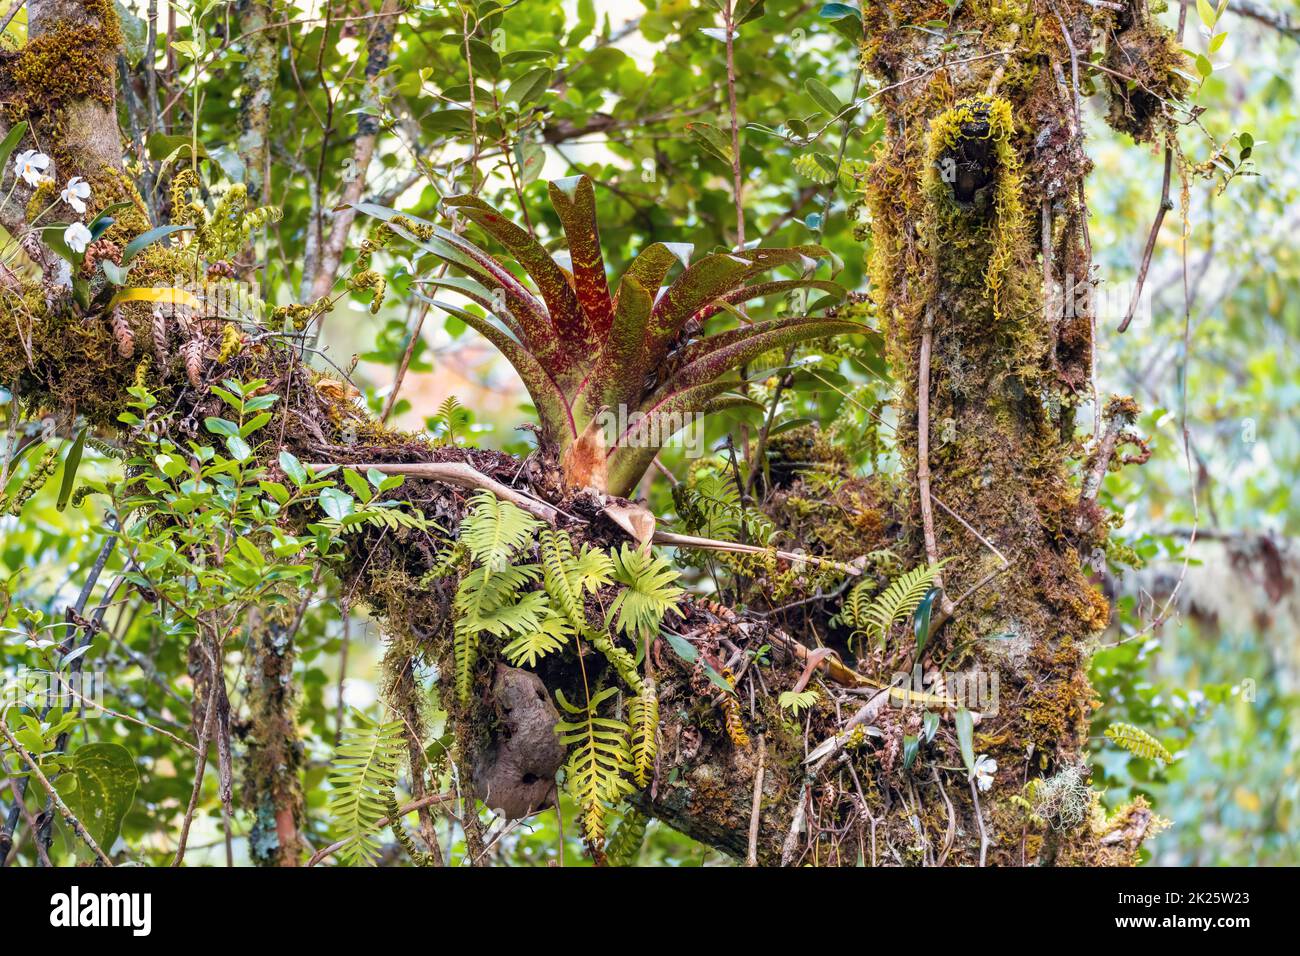 Bromeliad on a tree branch. San Gerardo, Costa Rica Stock Photo